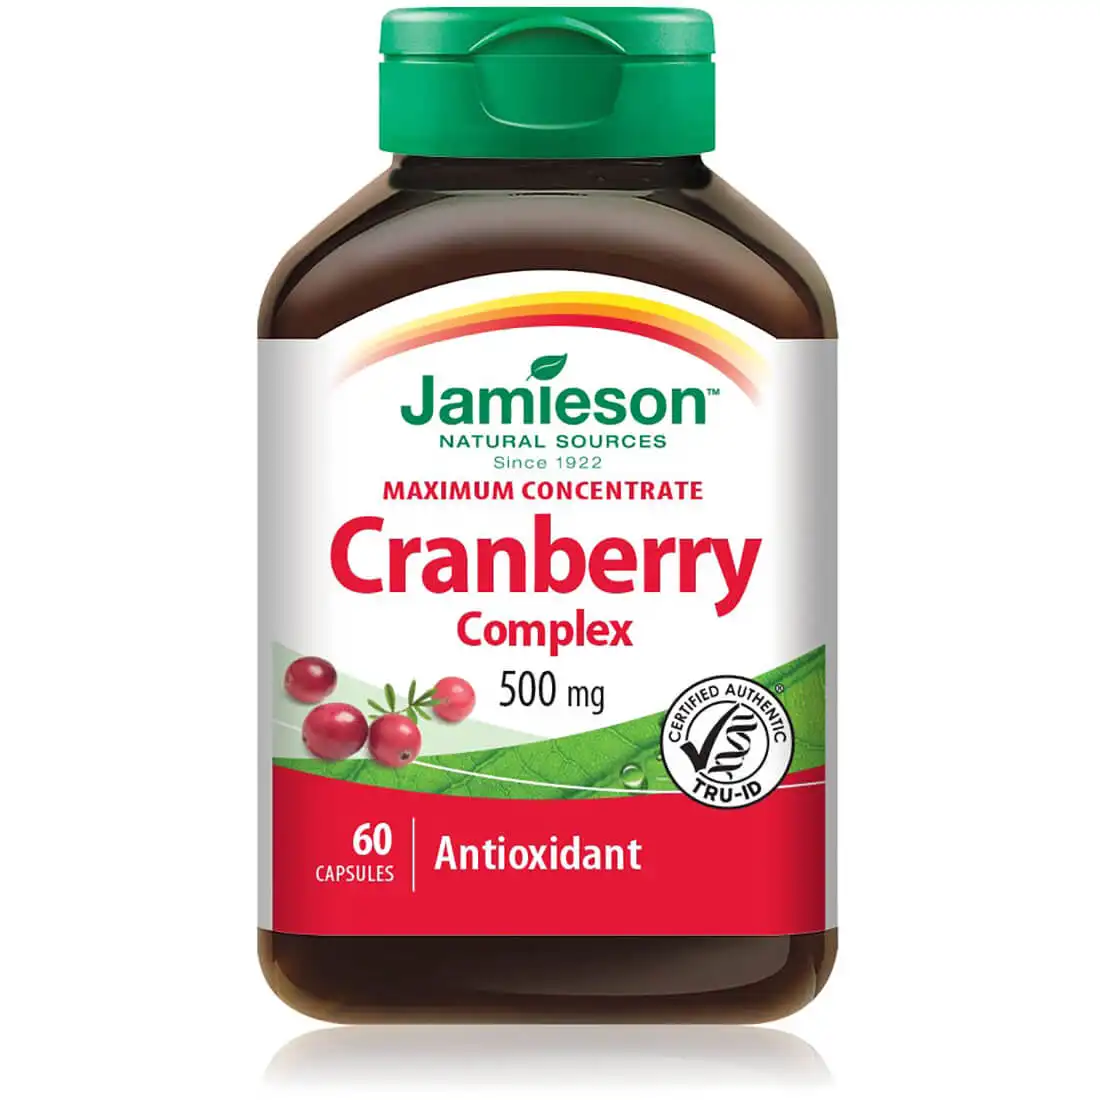 JAMIESON CRANBERRY COMPLEX FOR UTI & ANTIOXIDANT | 500MG